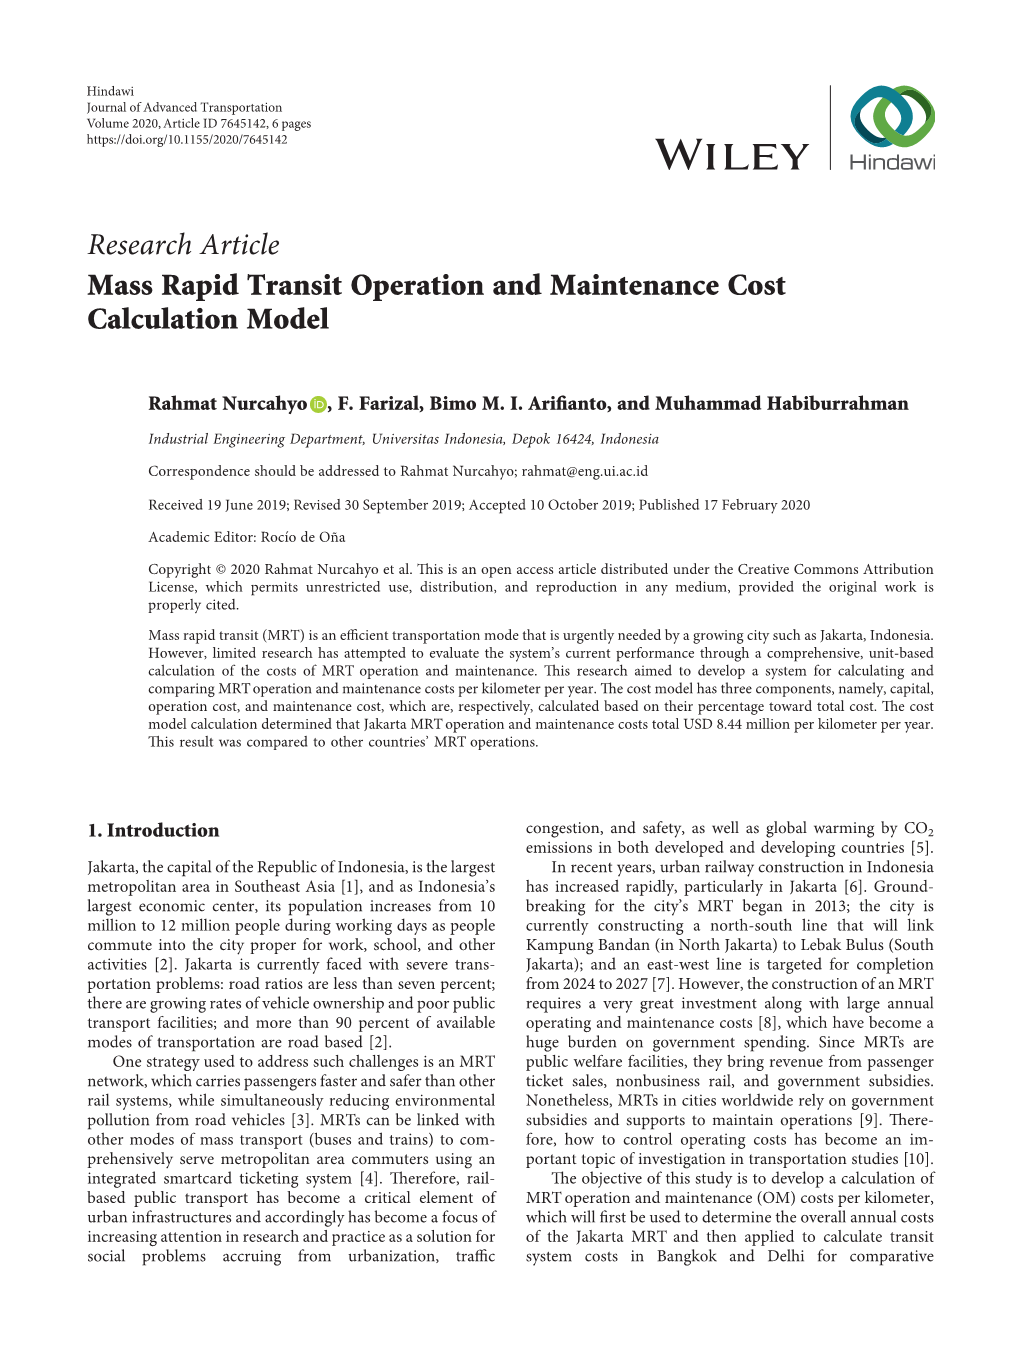 Mass Rapid Transit Operation and Maintenance Cost Calculation Model